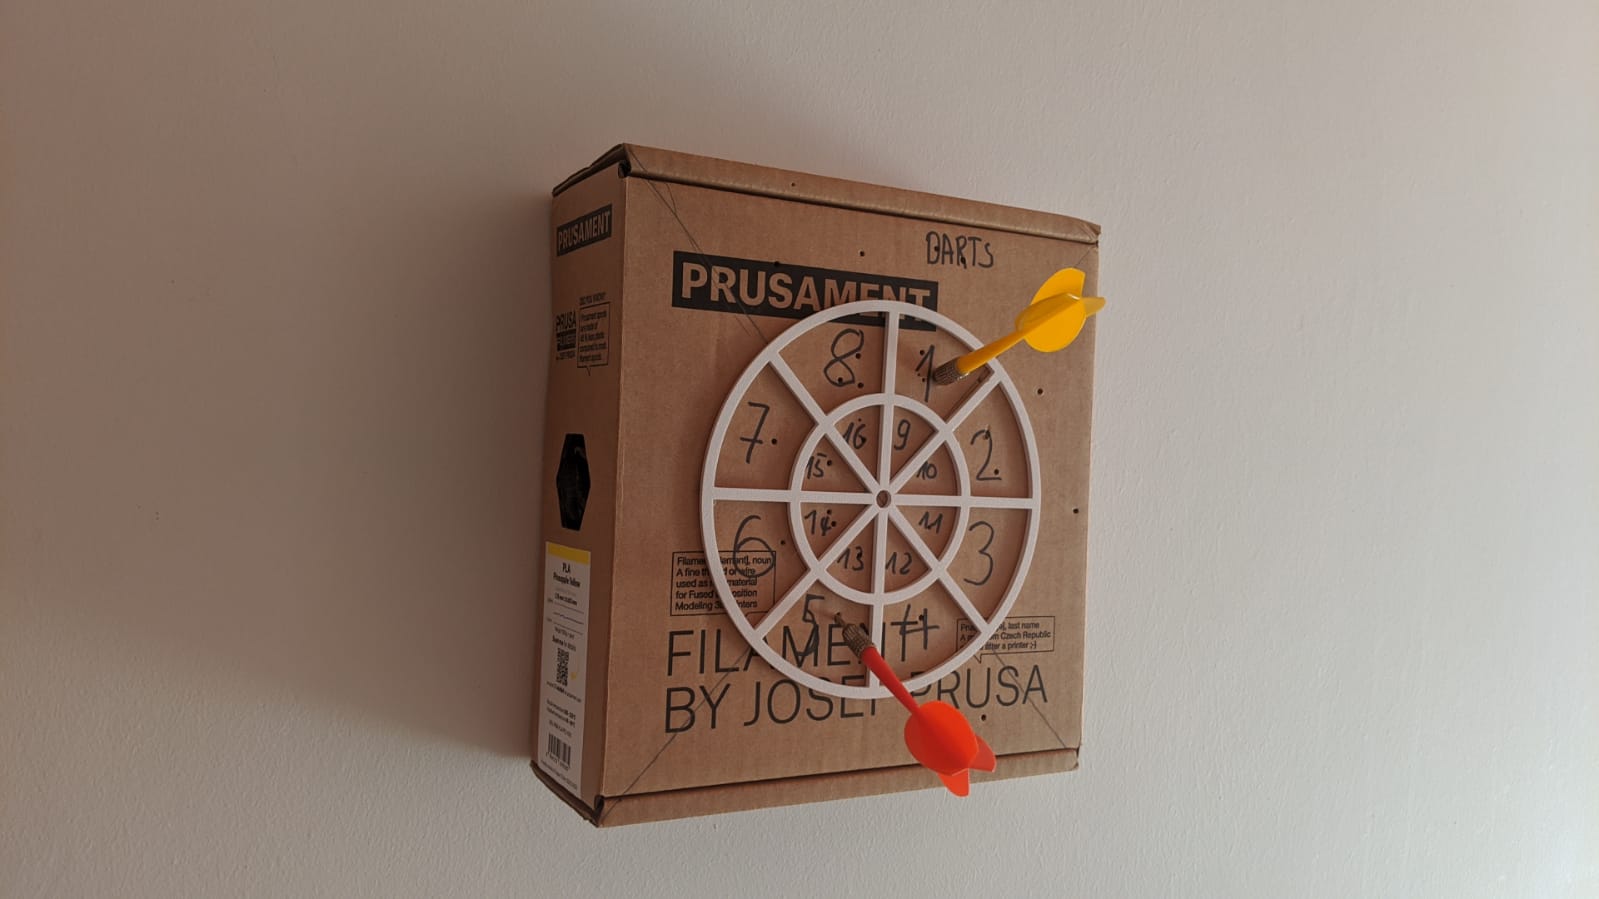 DIY Dartboard with Prusament cardboard box!